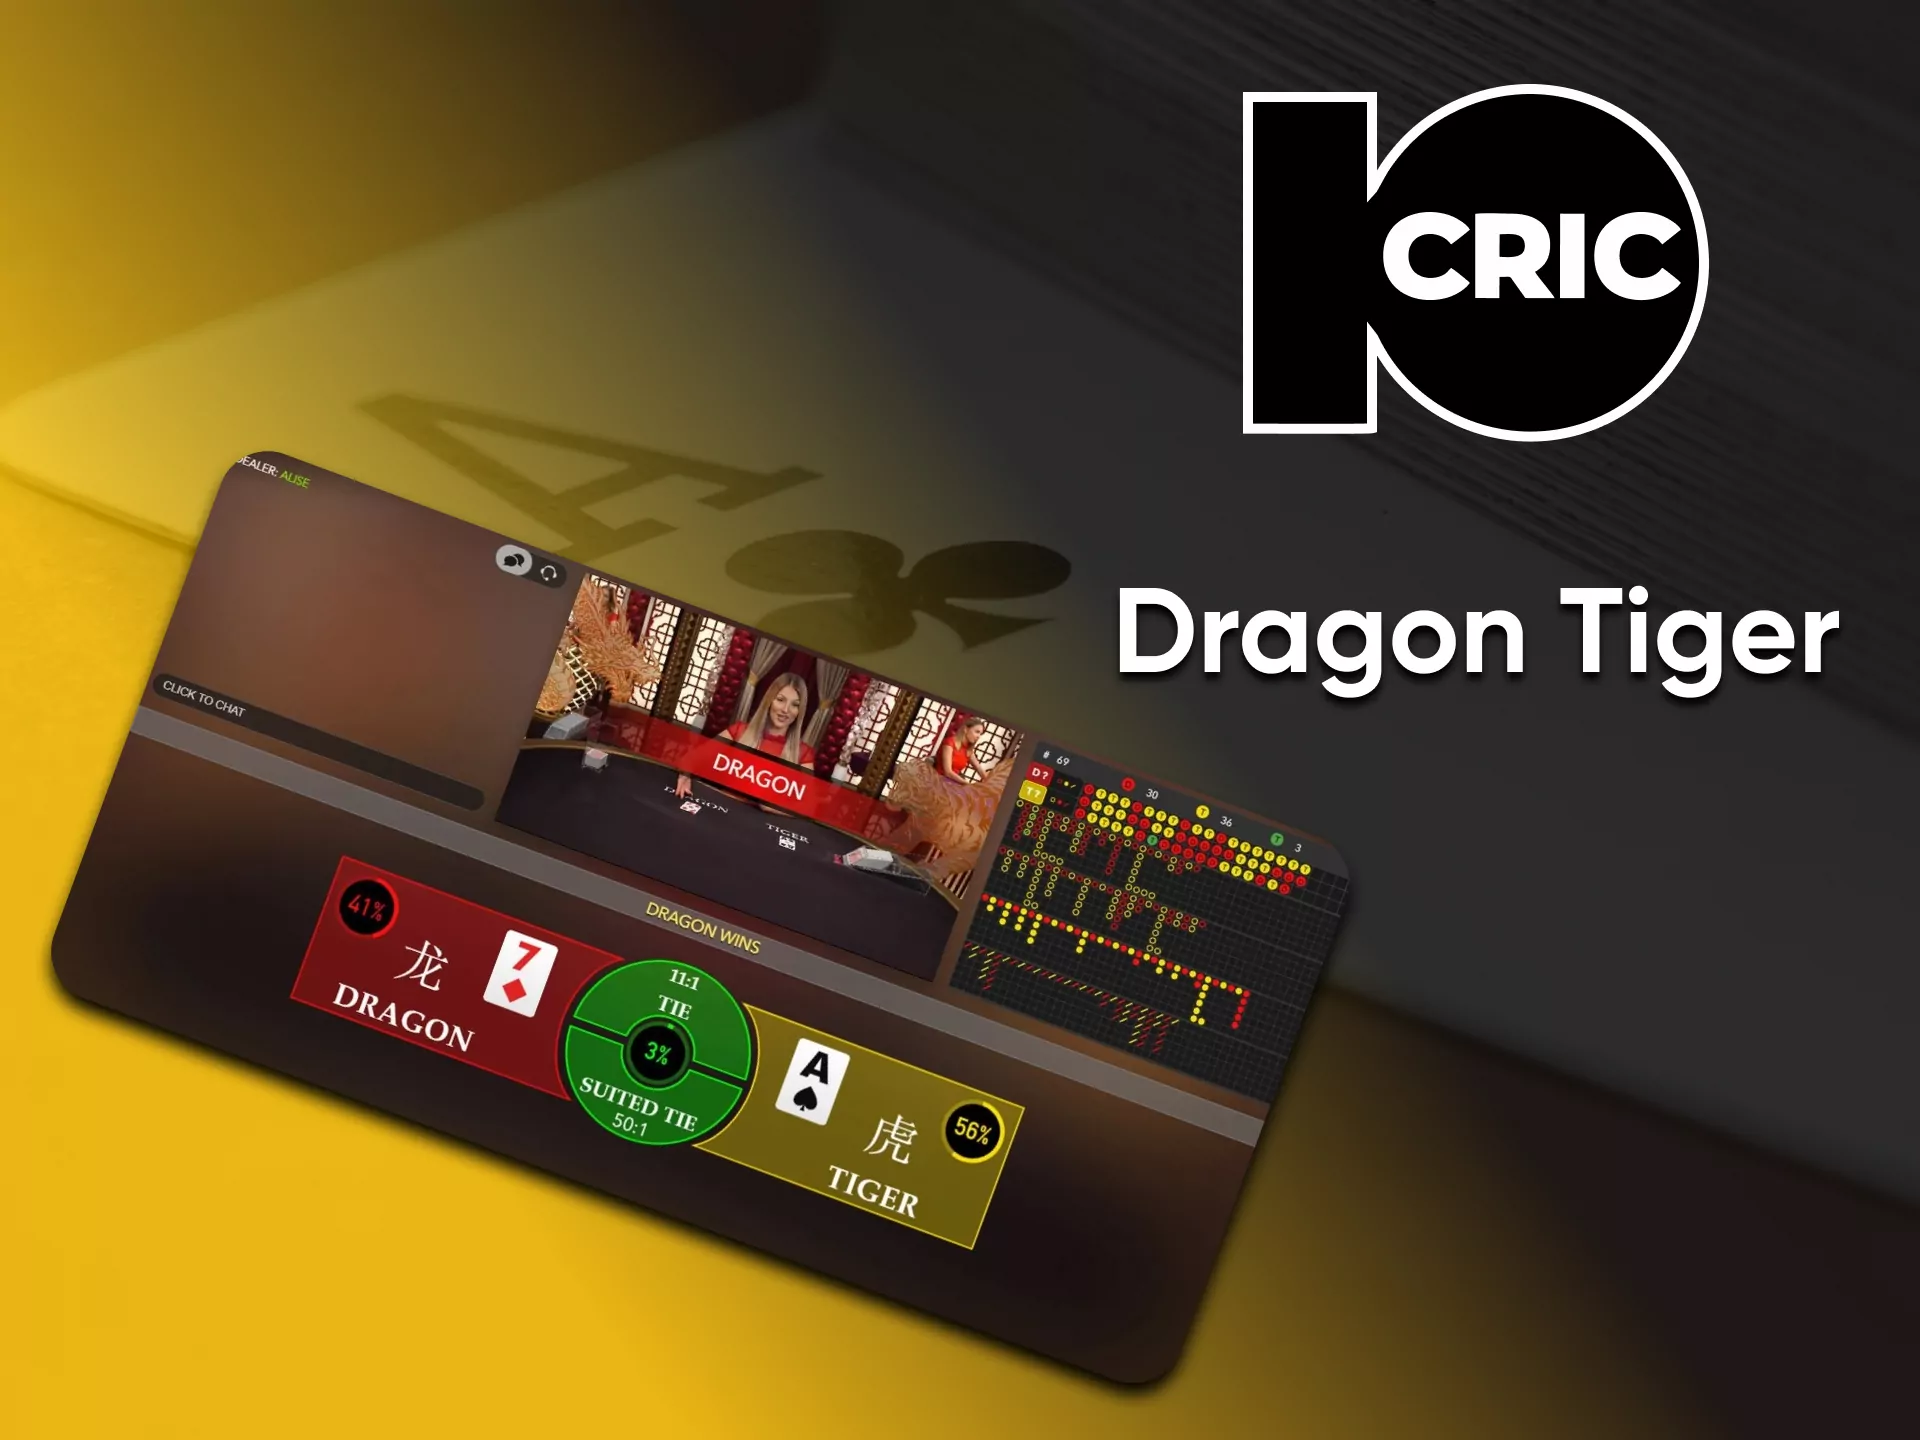 You can play Dragon Tiger on 10cric.